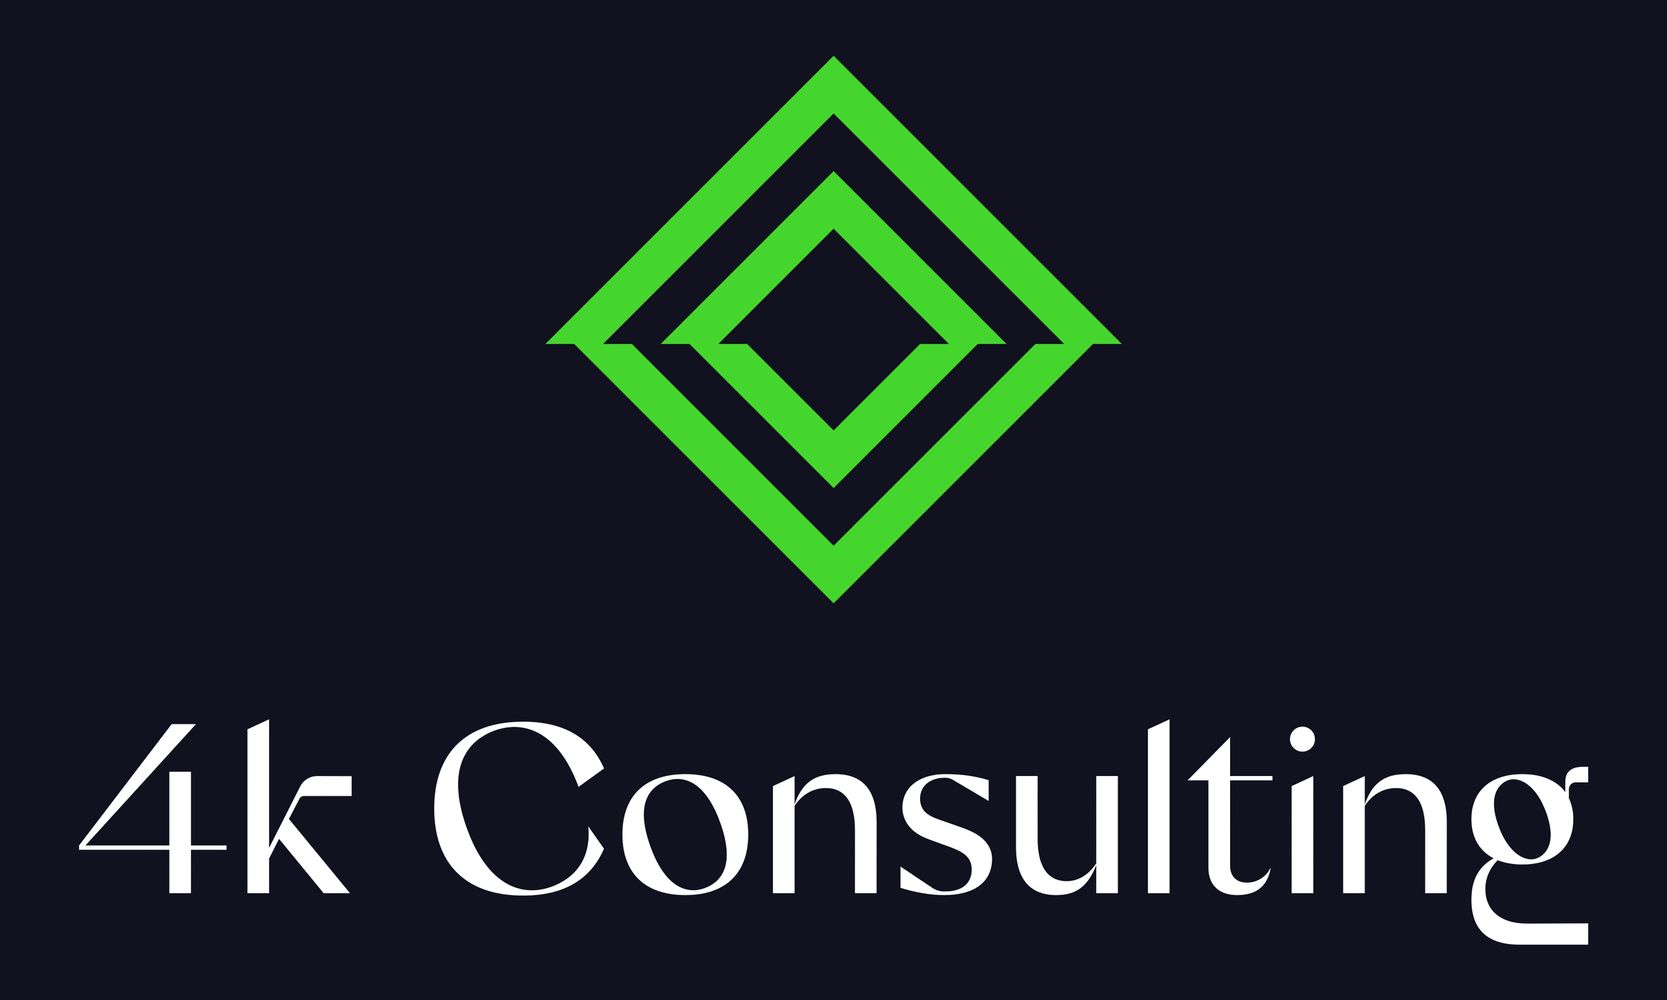 4k Consulting logo